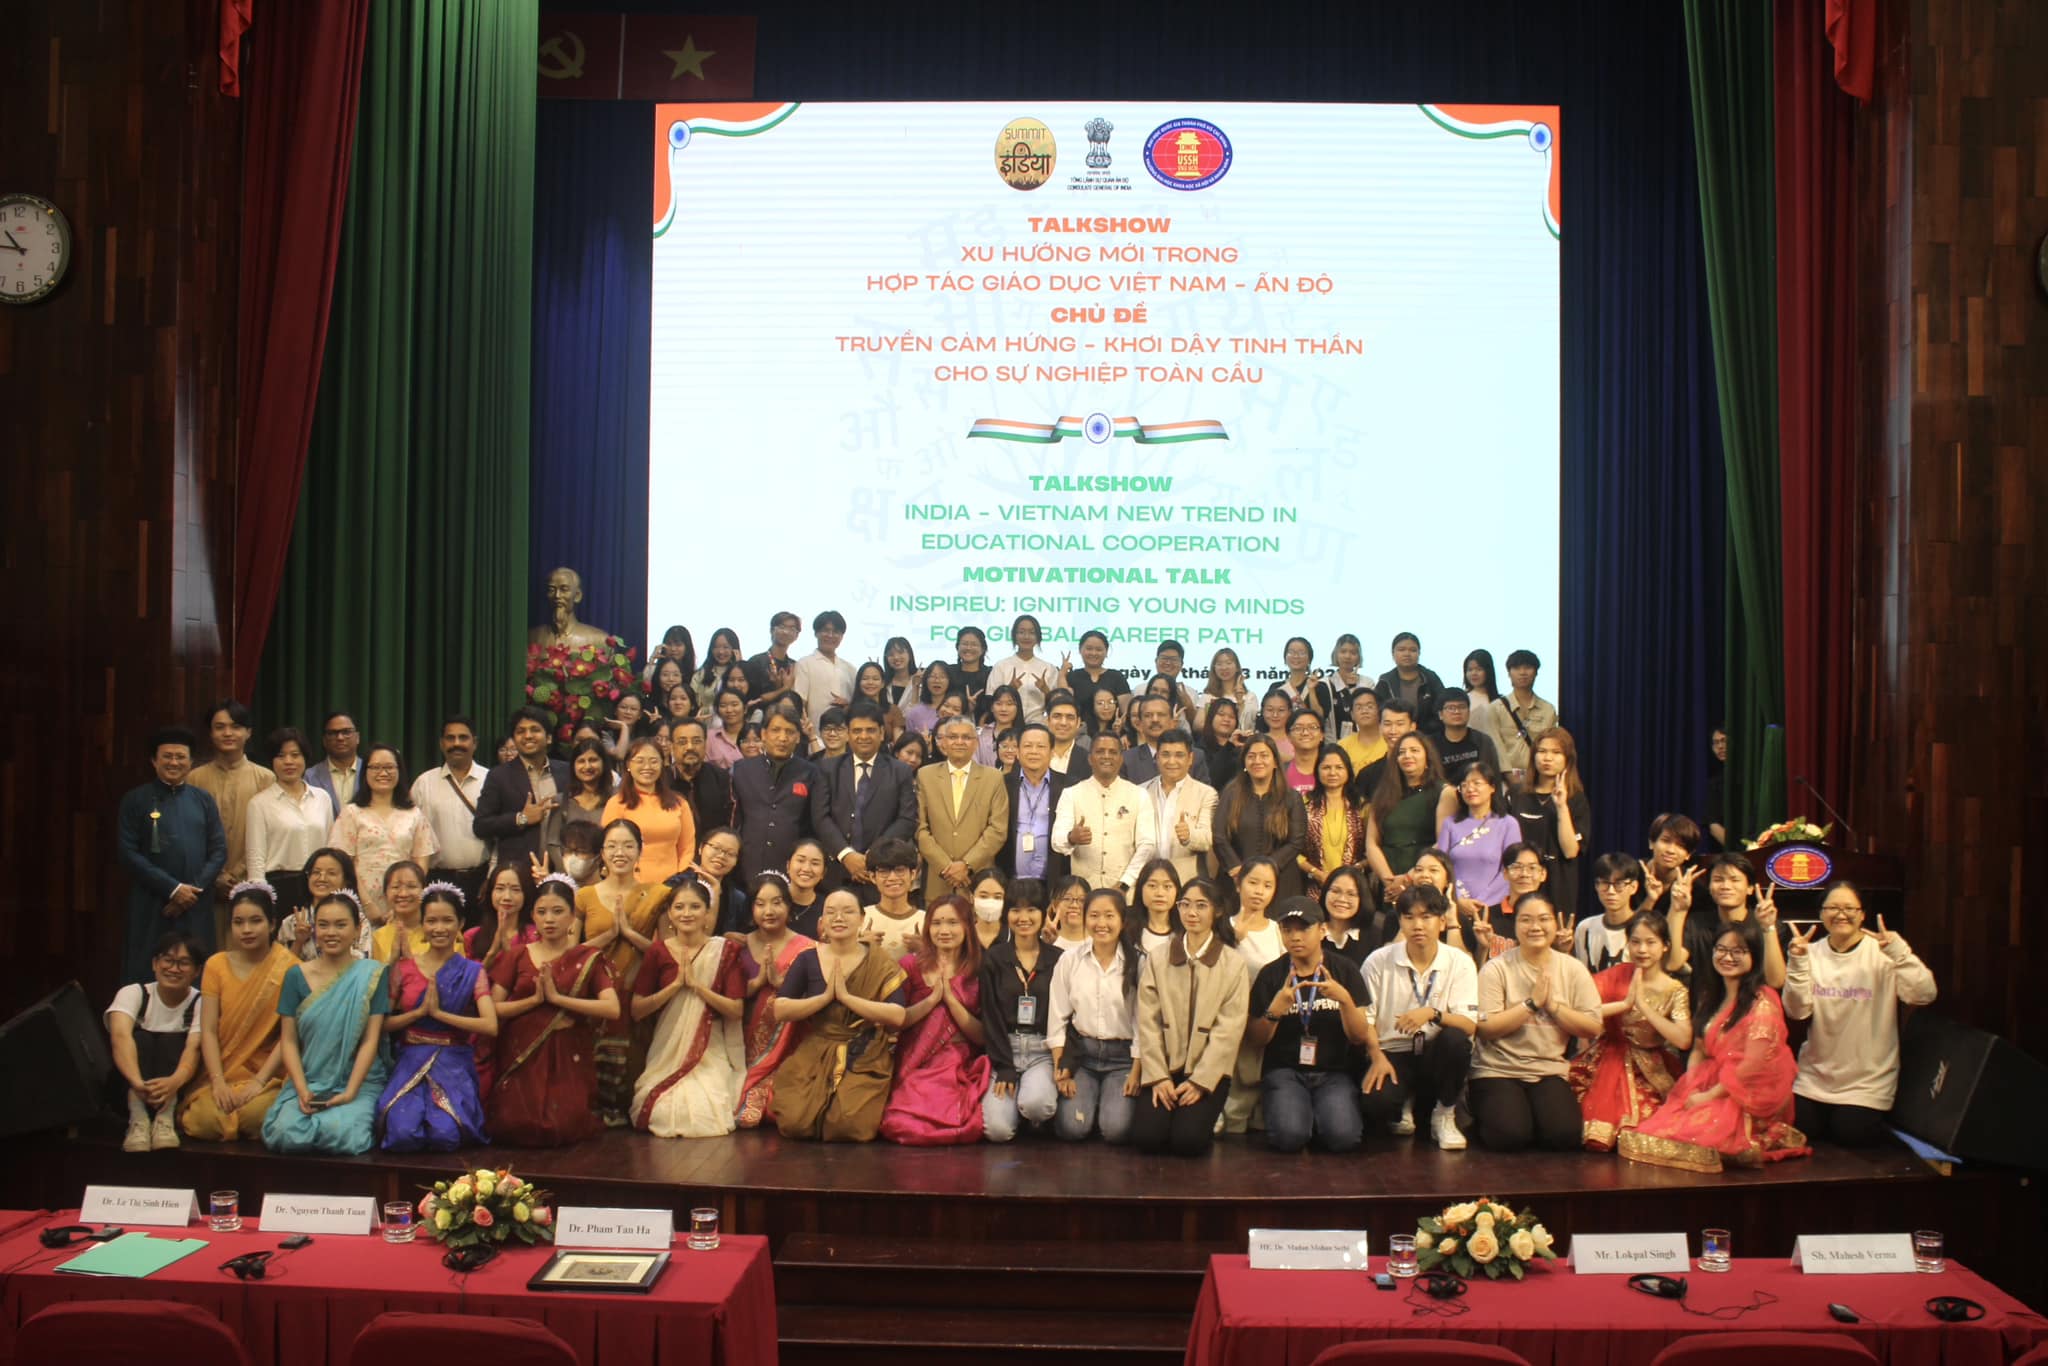 USSH Talkshow “India – Vietnam New Trend In Educational Cooperation”